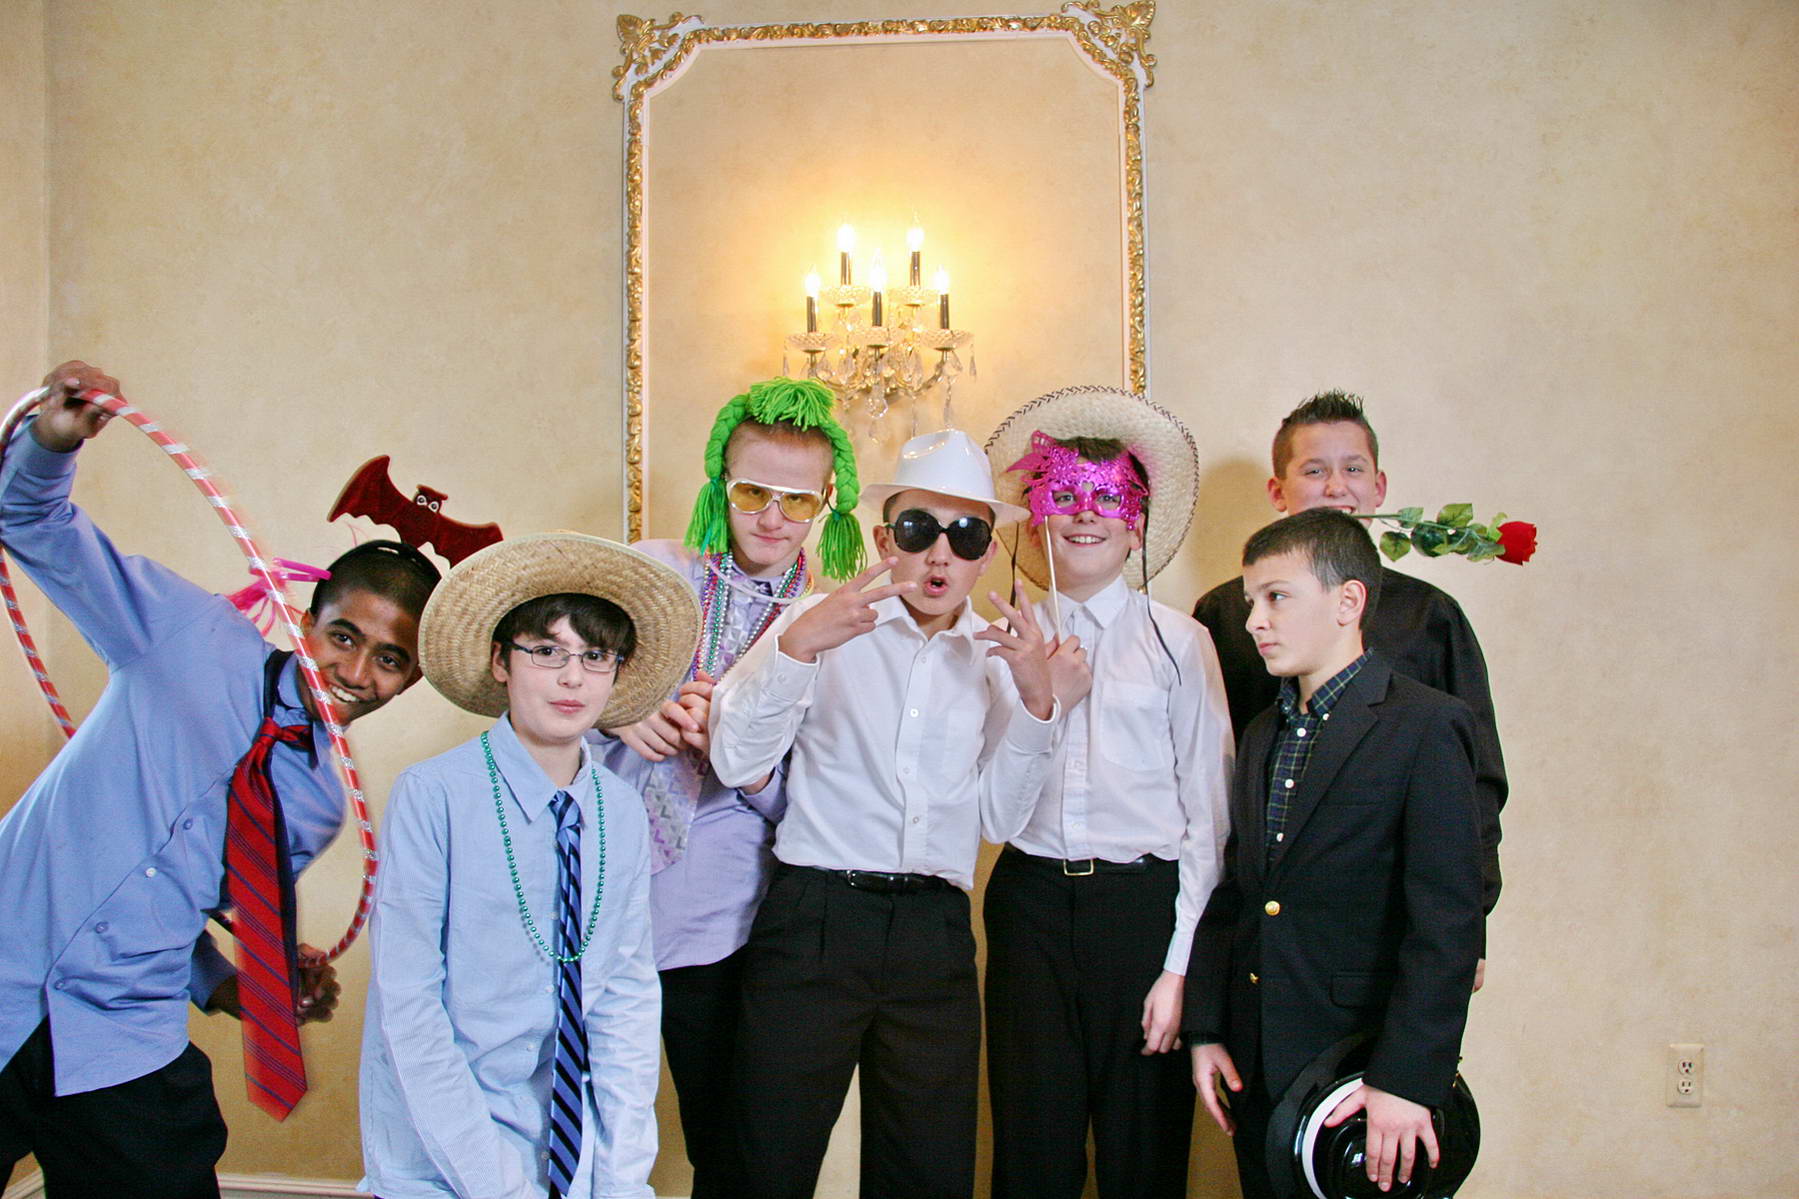 The Kids,Flander’s Valley Weddings,PhotoBooth